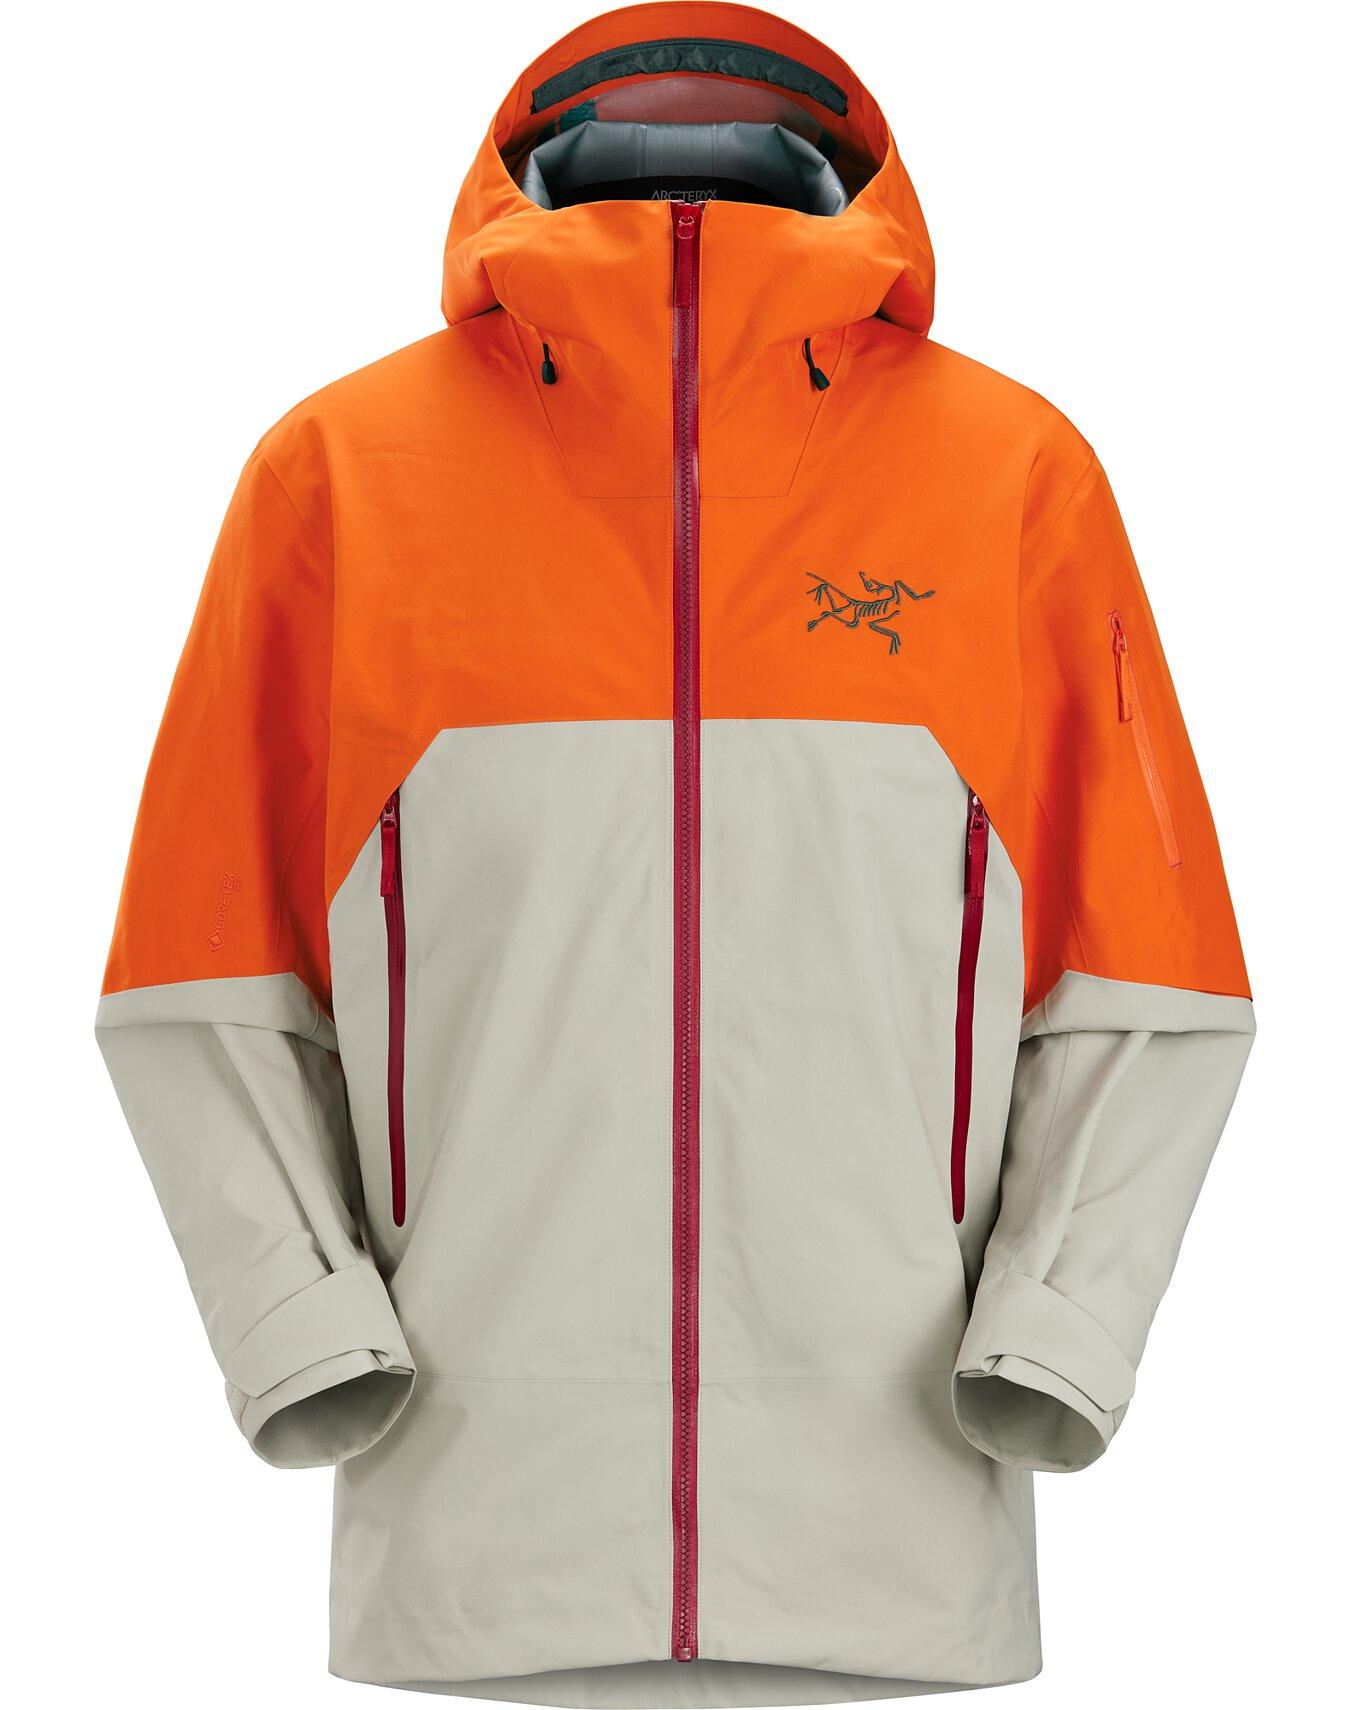 Goretex Ski Jacket, Jacket Buyer's Guide, Arc'teryx